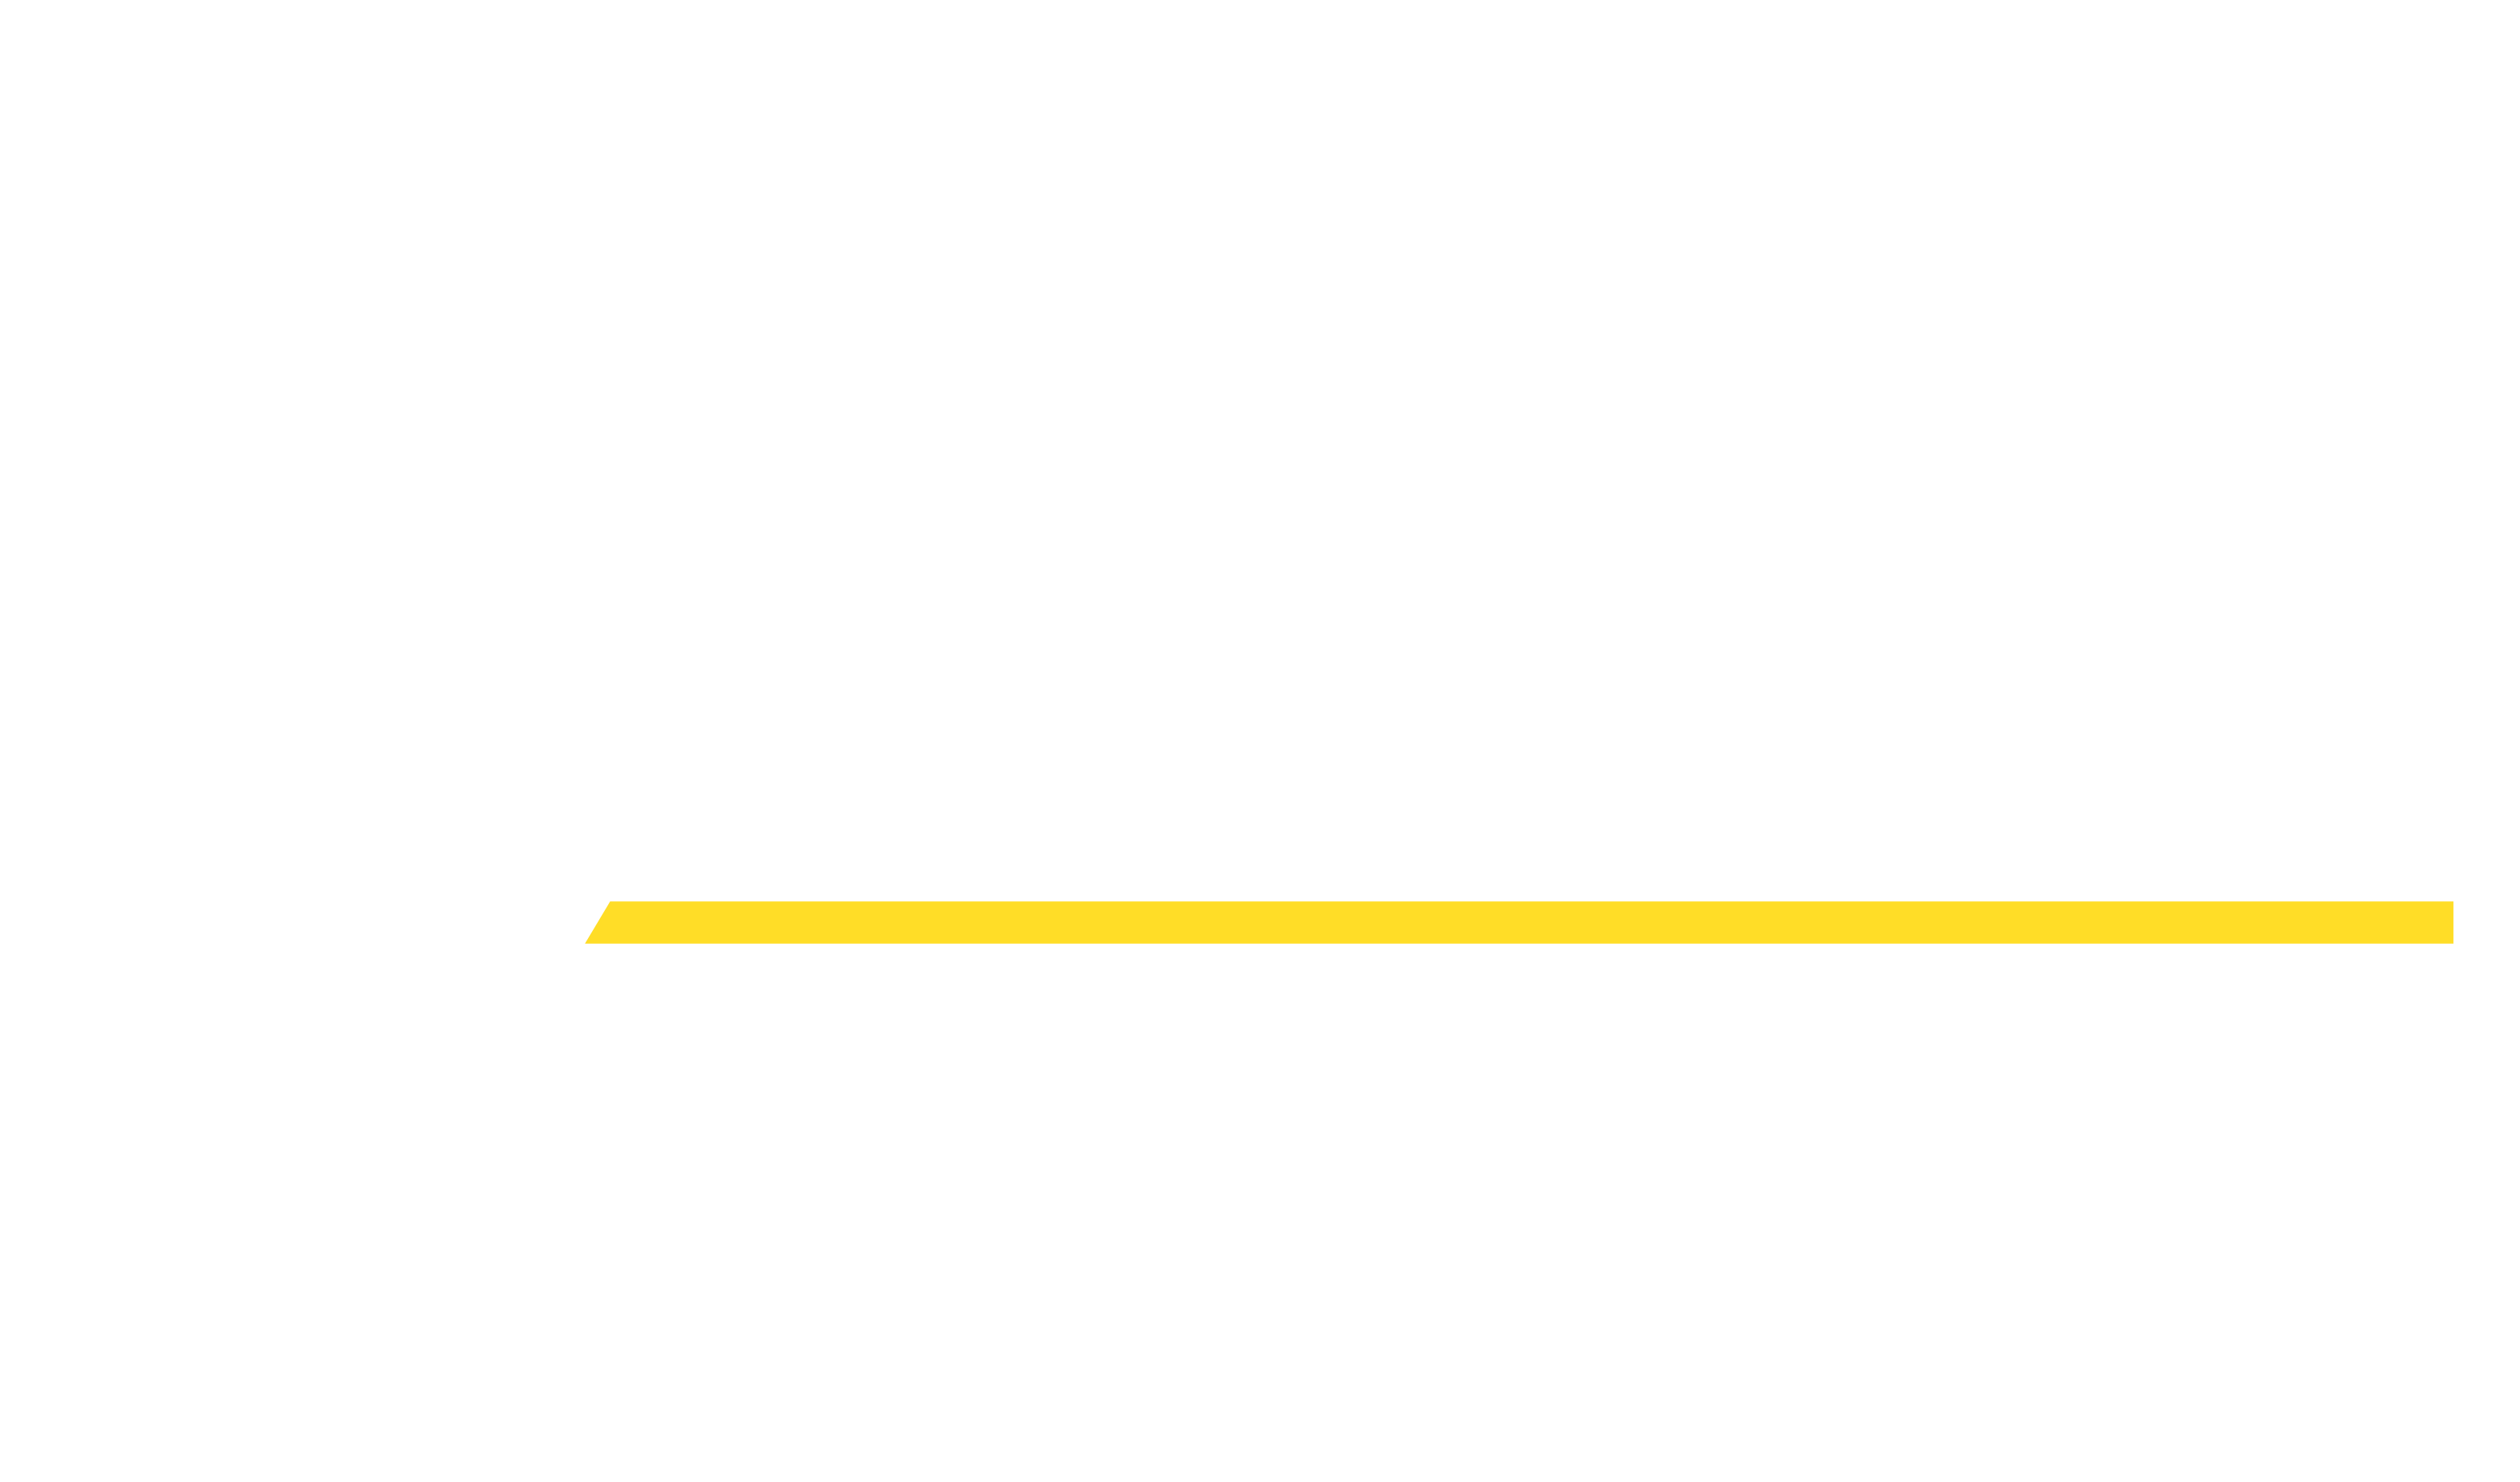 Australia's National Cloud